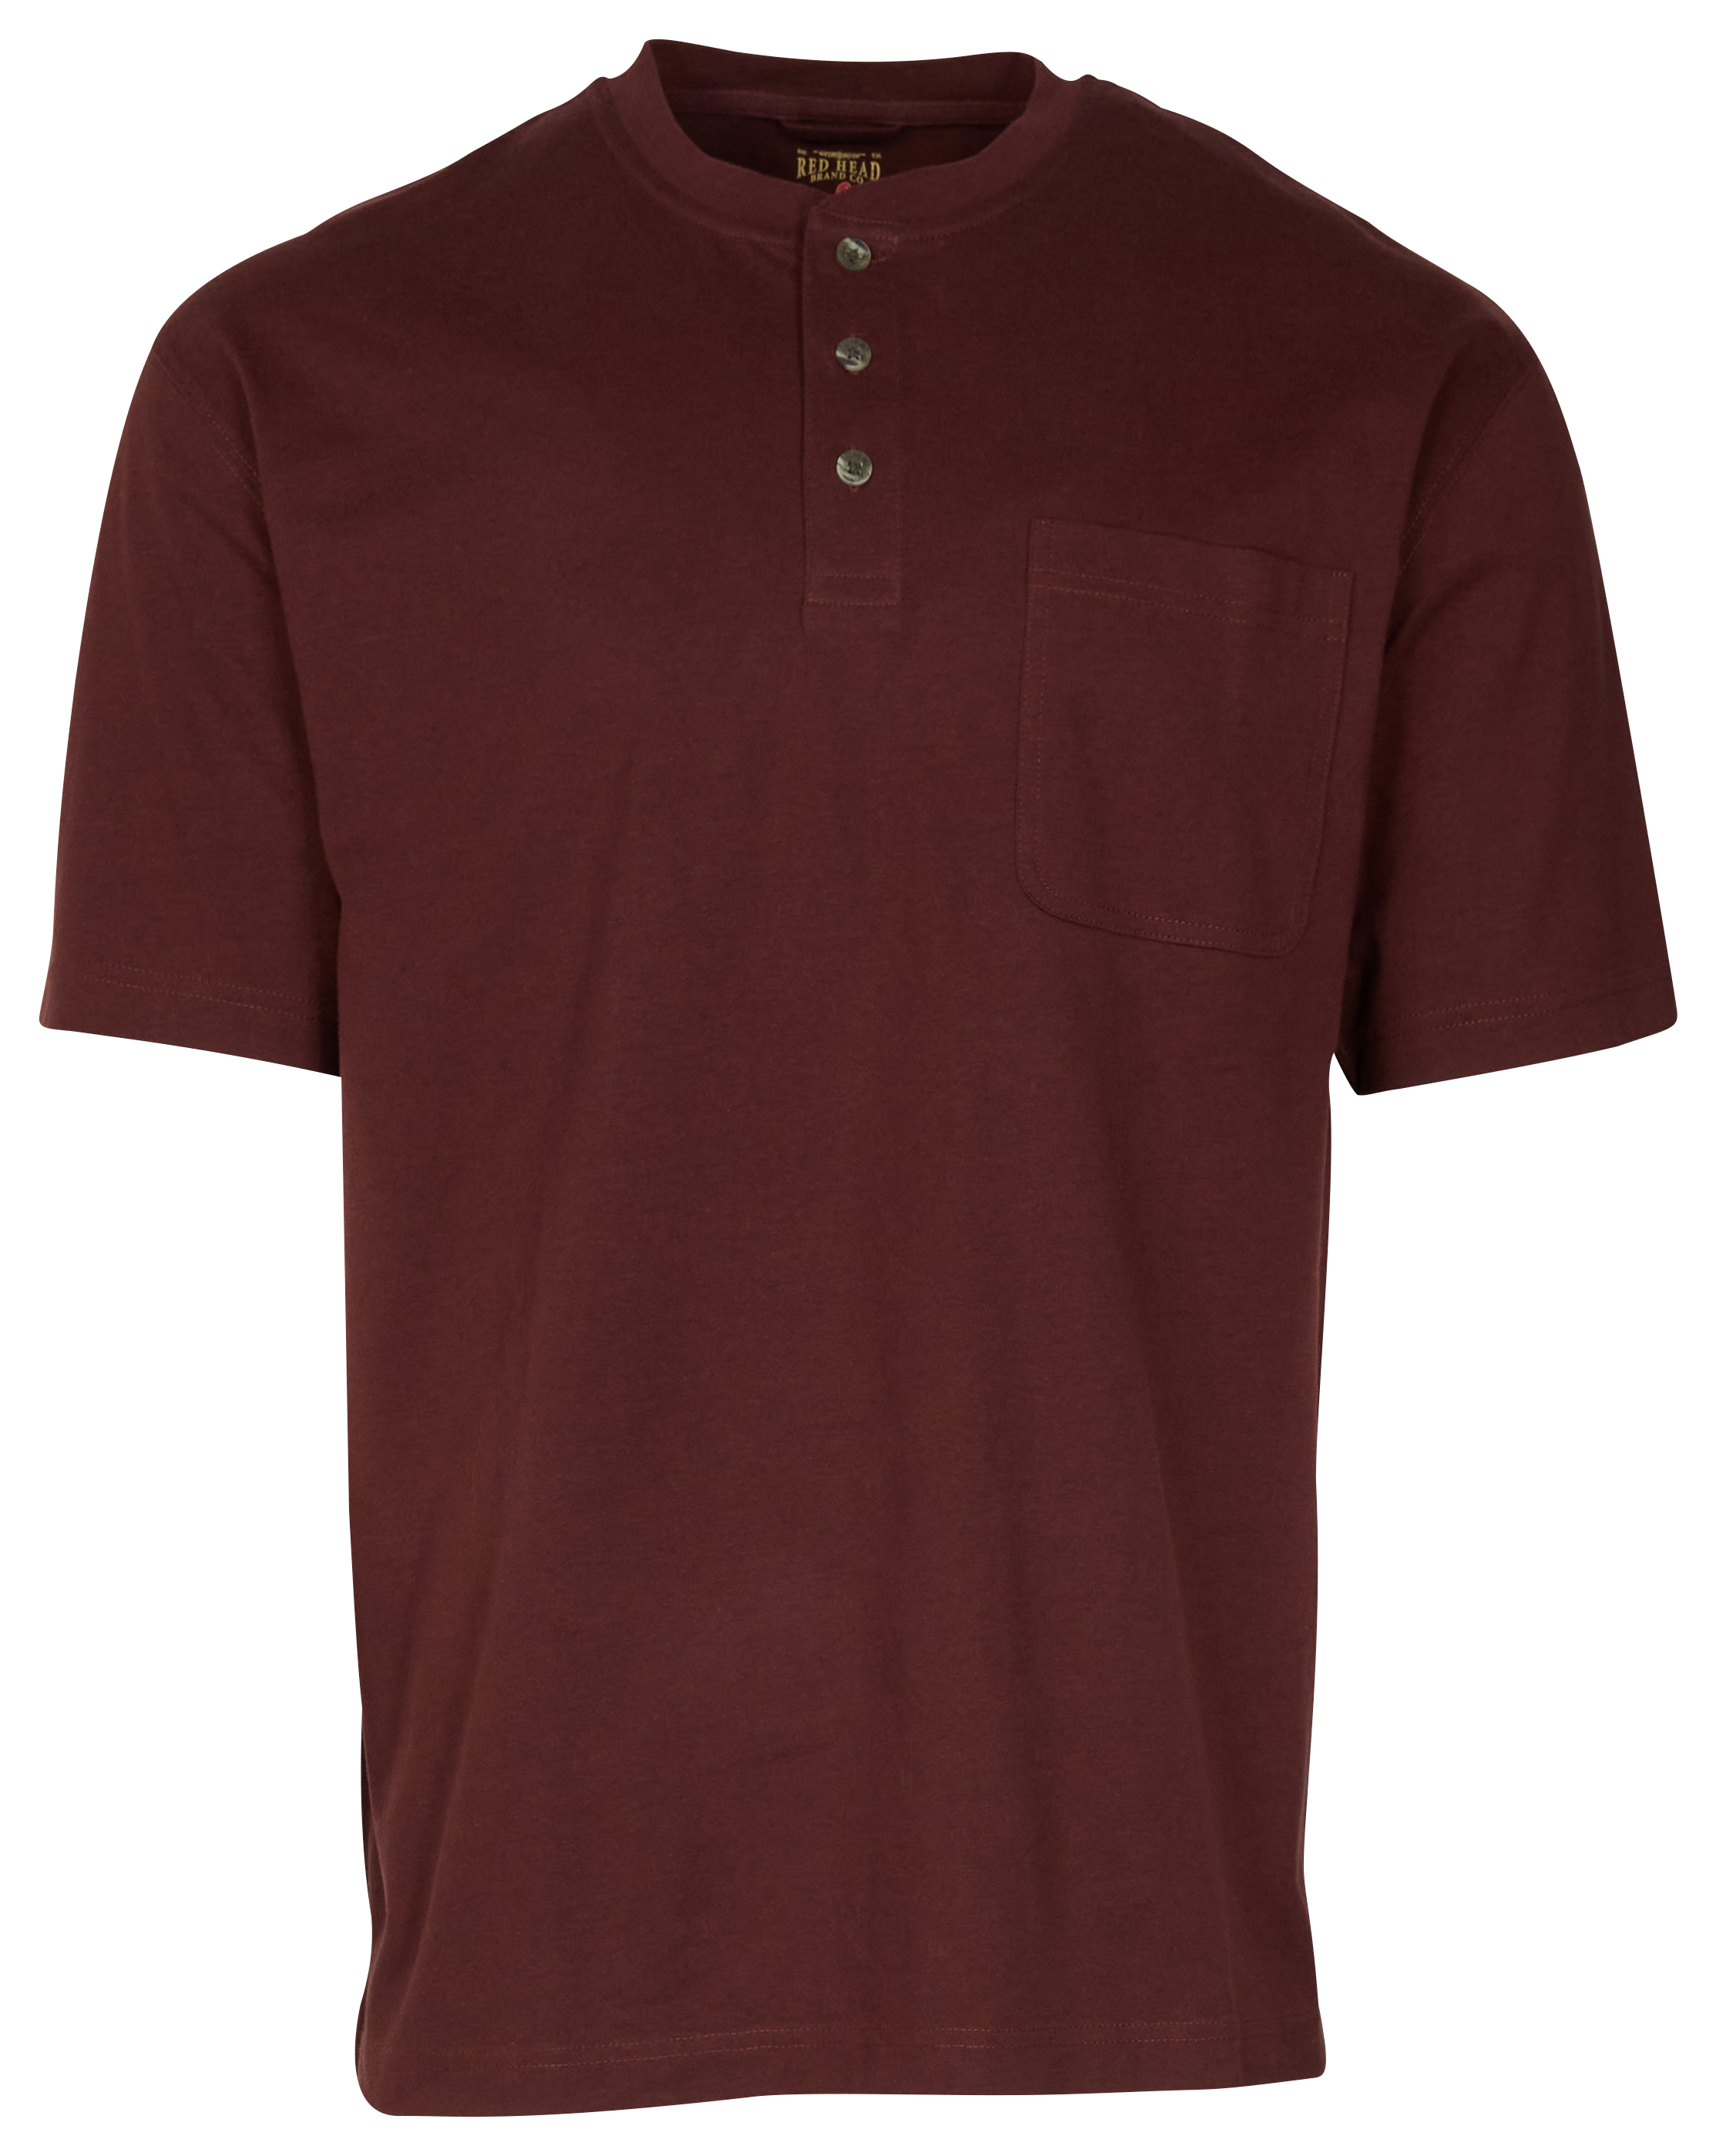 RedHead Henley Pocket Short-Sleeve Shirt for Men - Wine Heather - 3XLT